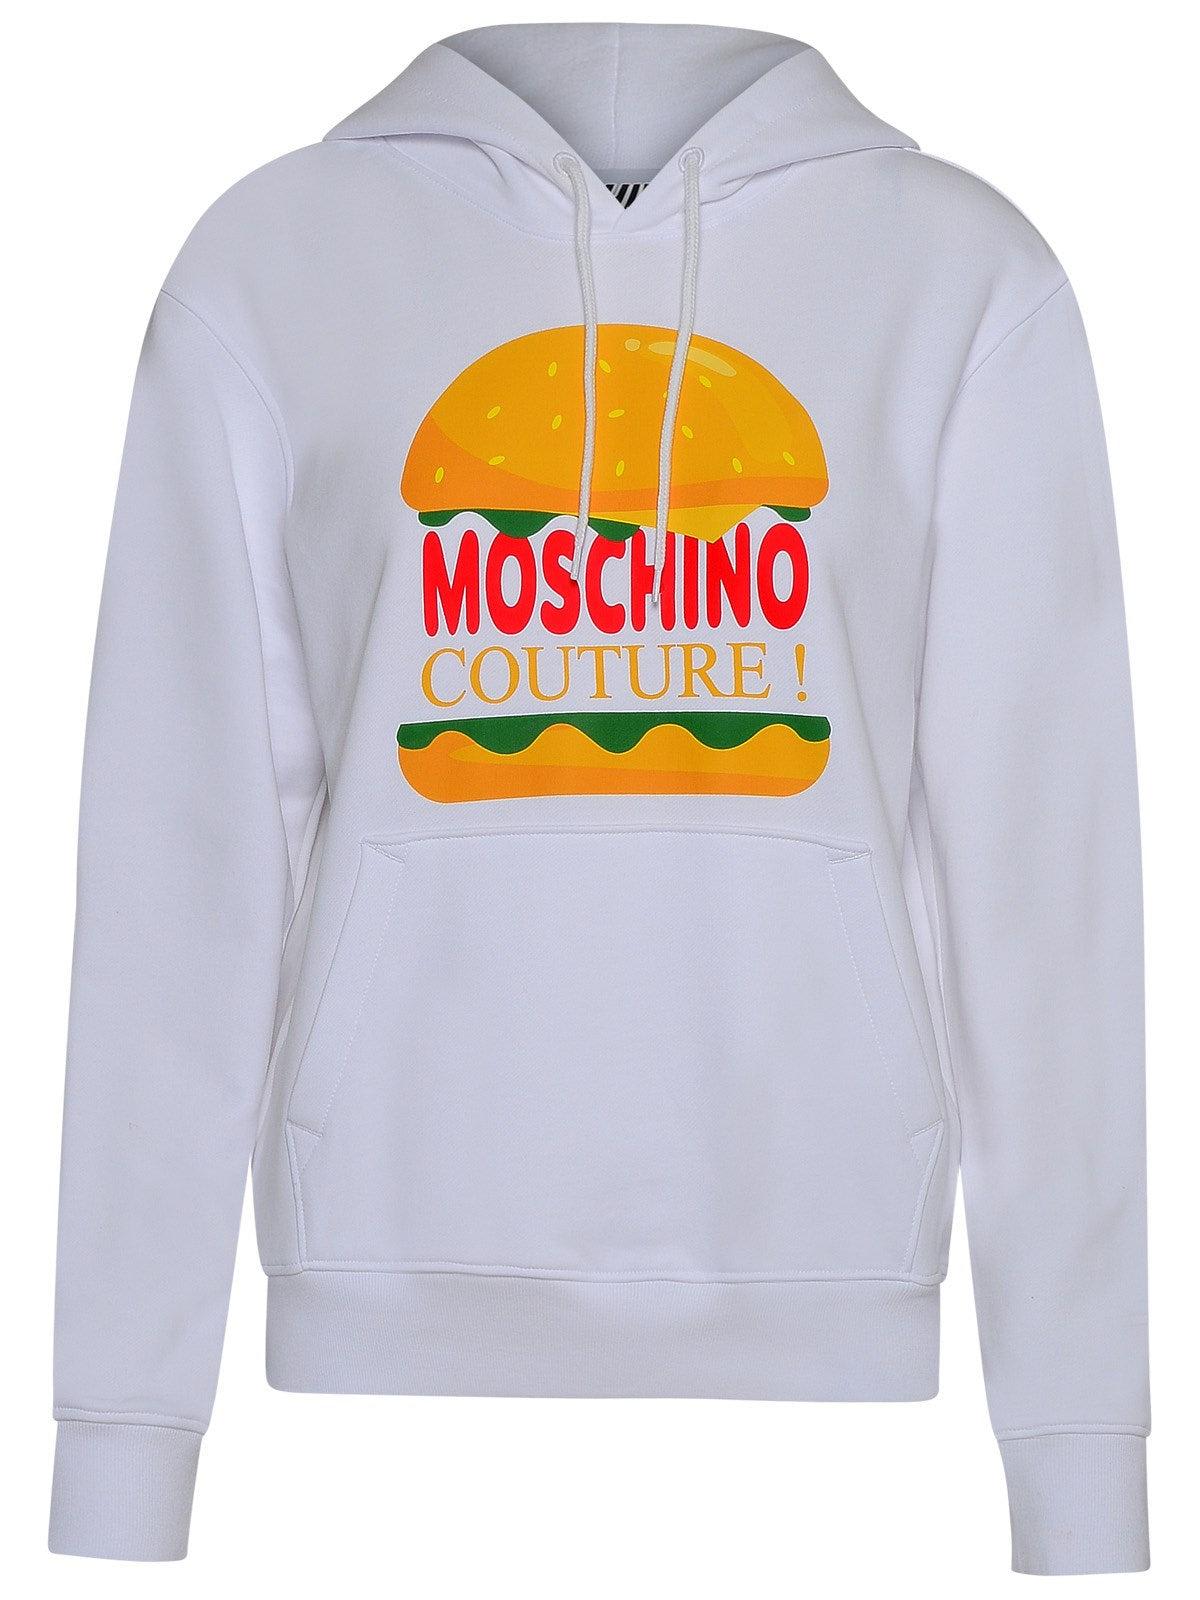 Moschino Couture Logo Printed Drawstring Hoodie